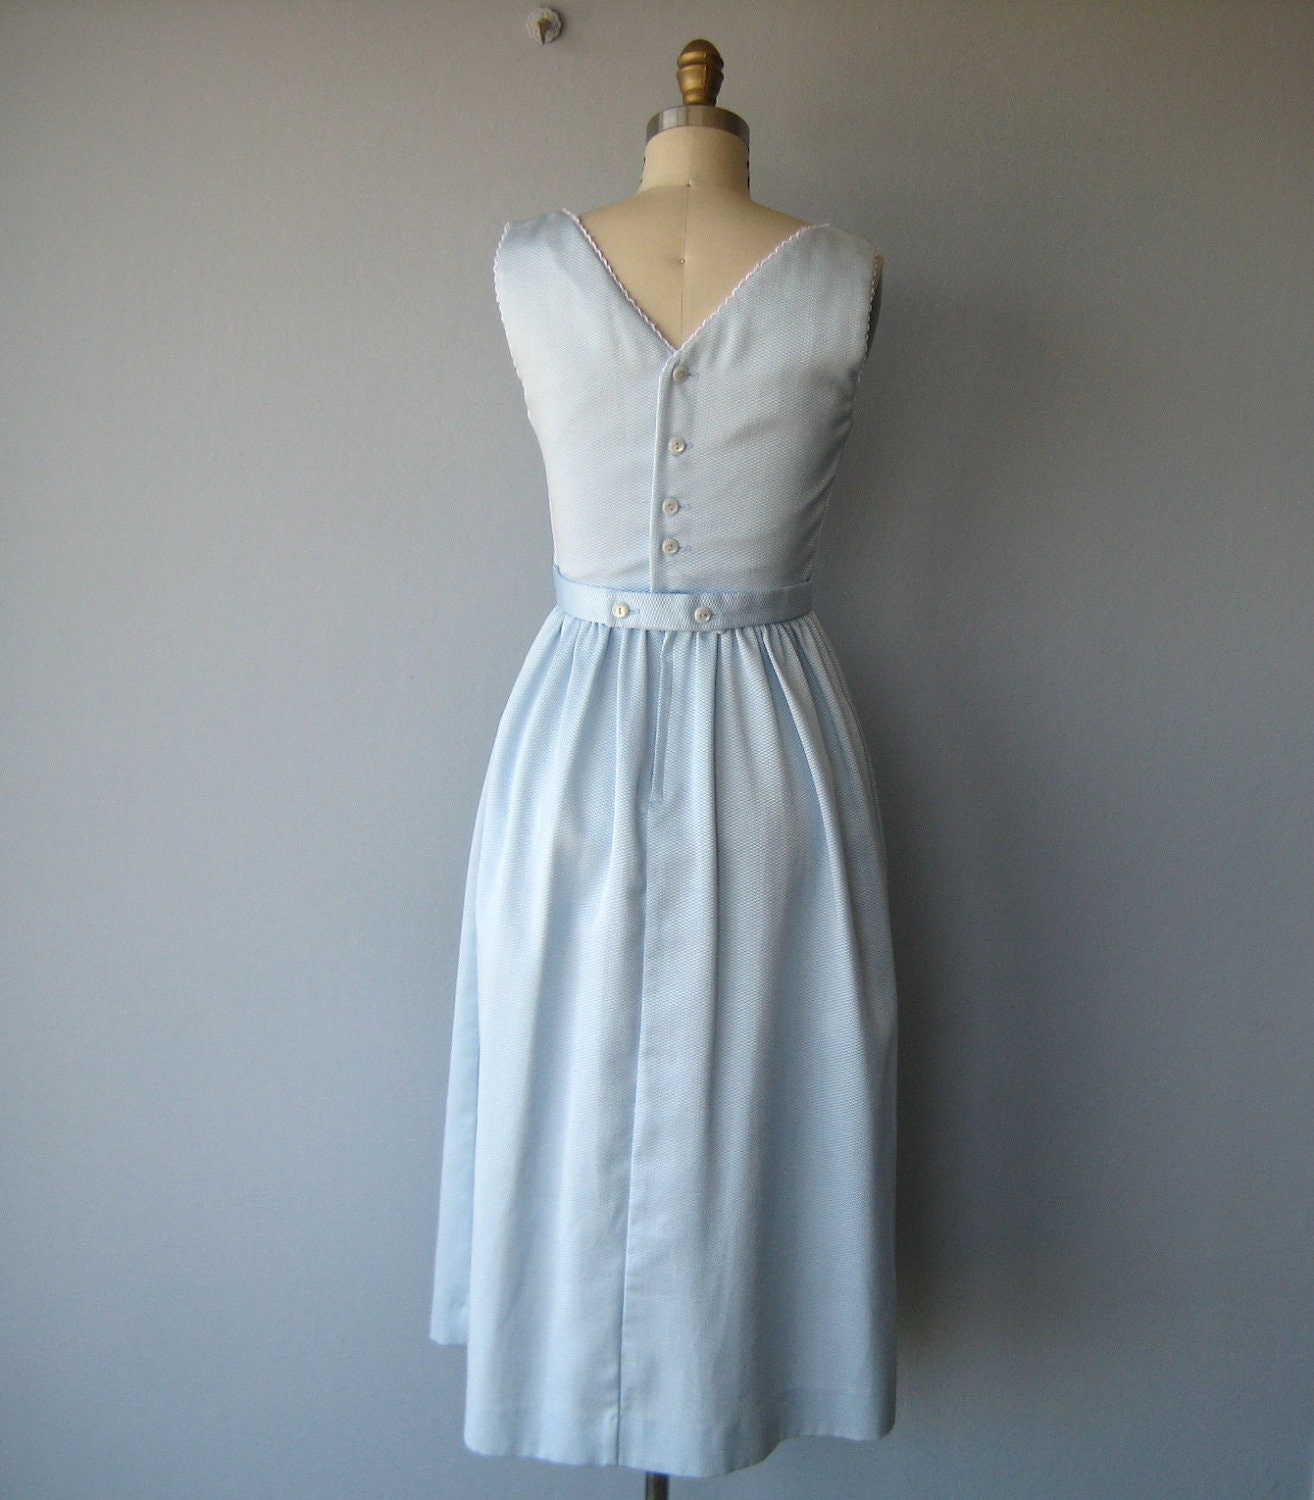 1970s vintage day dress | Day dresses, Dresses, Fashion